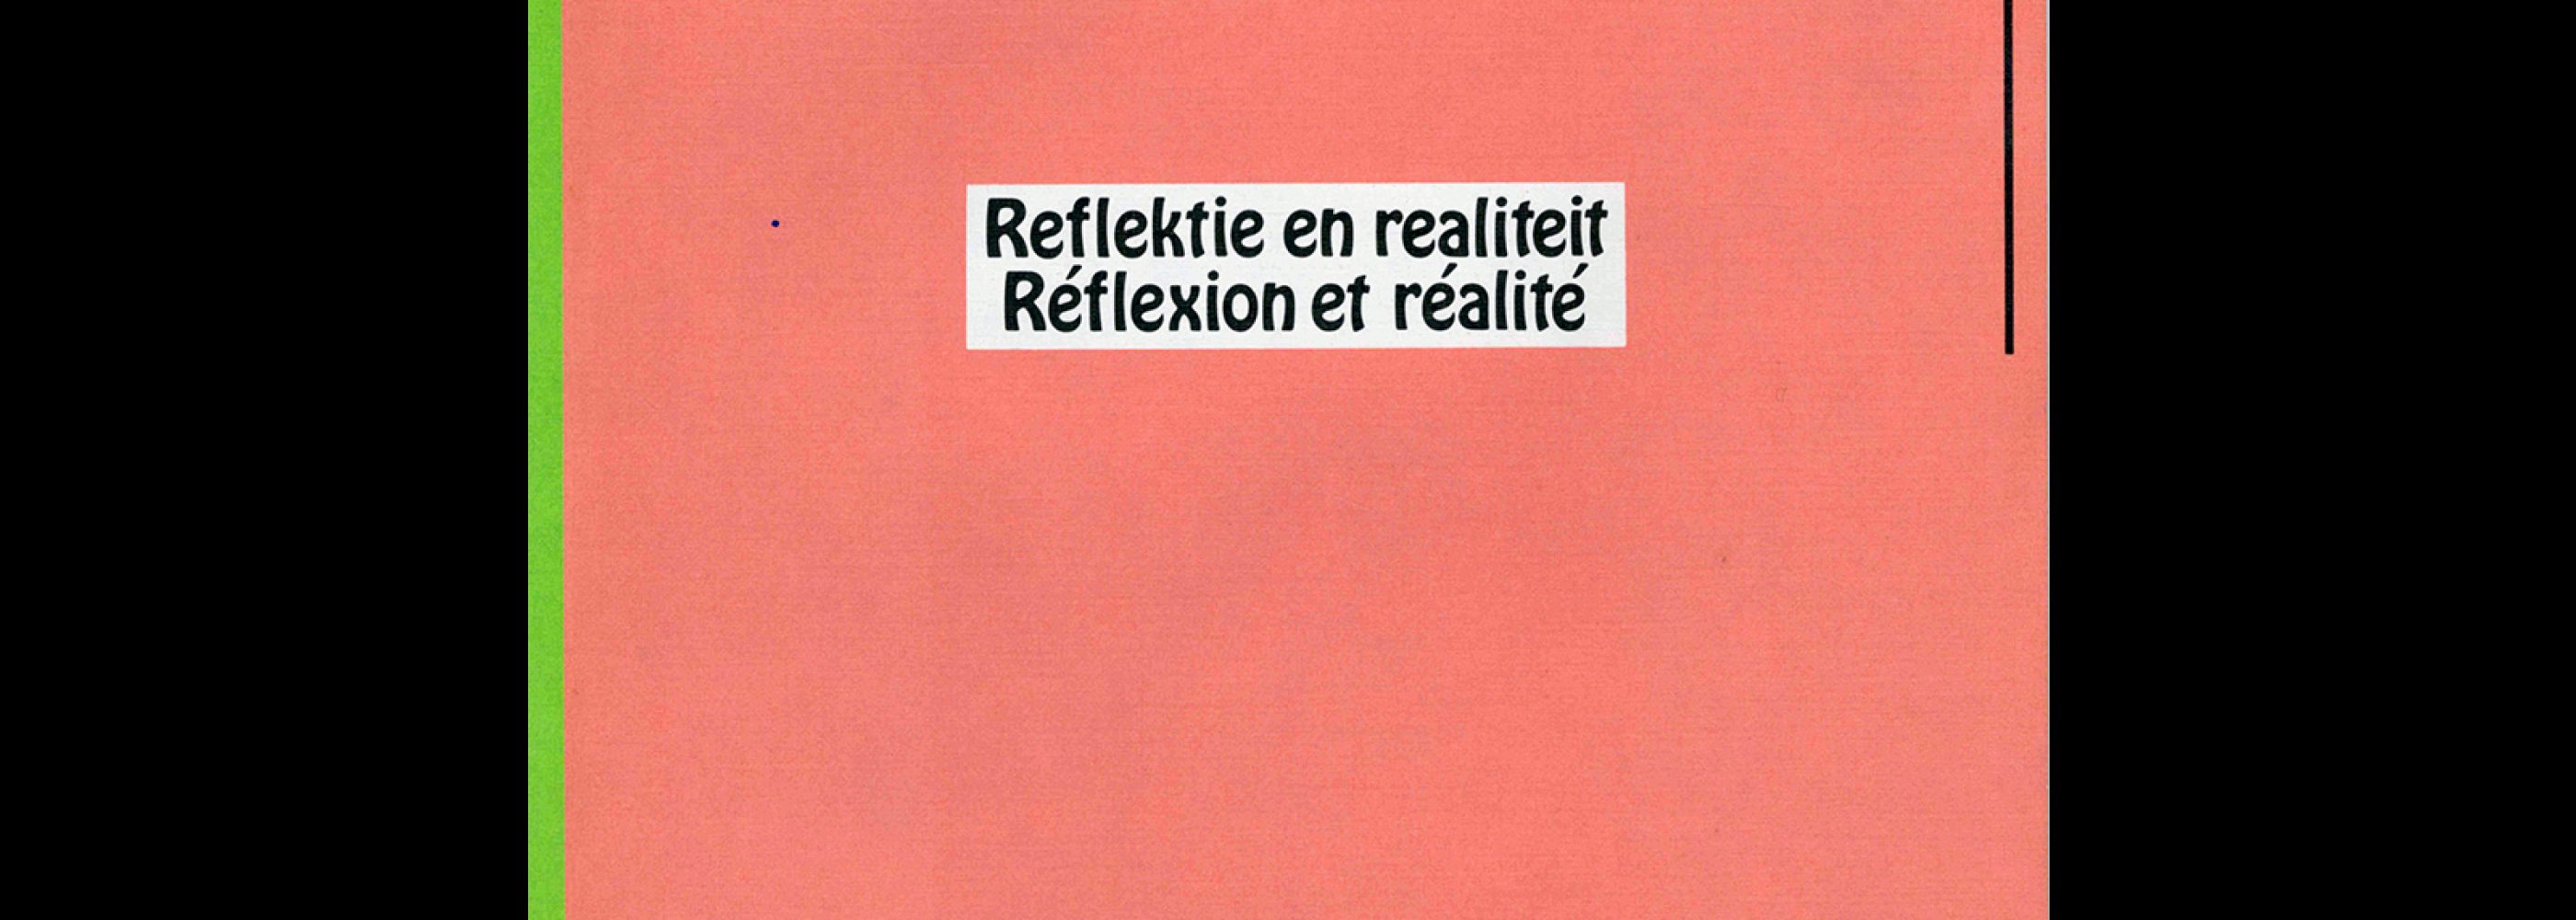 Reflektie en Realiteit, Reflexion et Realité, 1976. Designed by Jan van Toorn